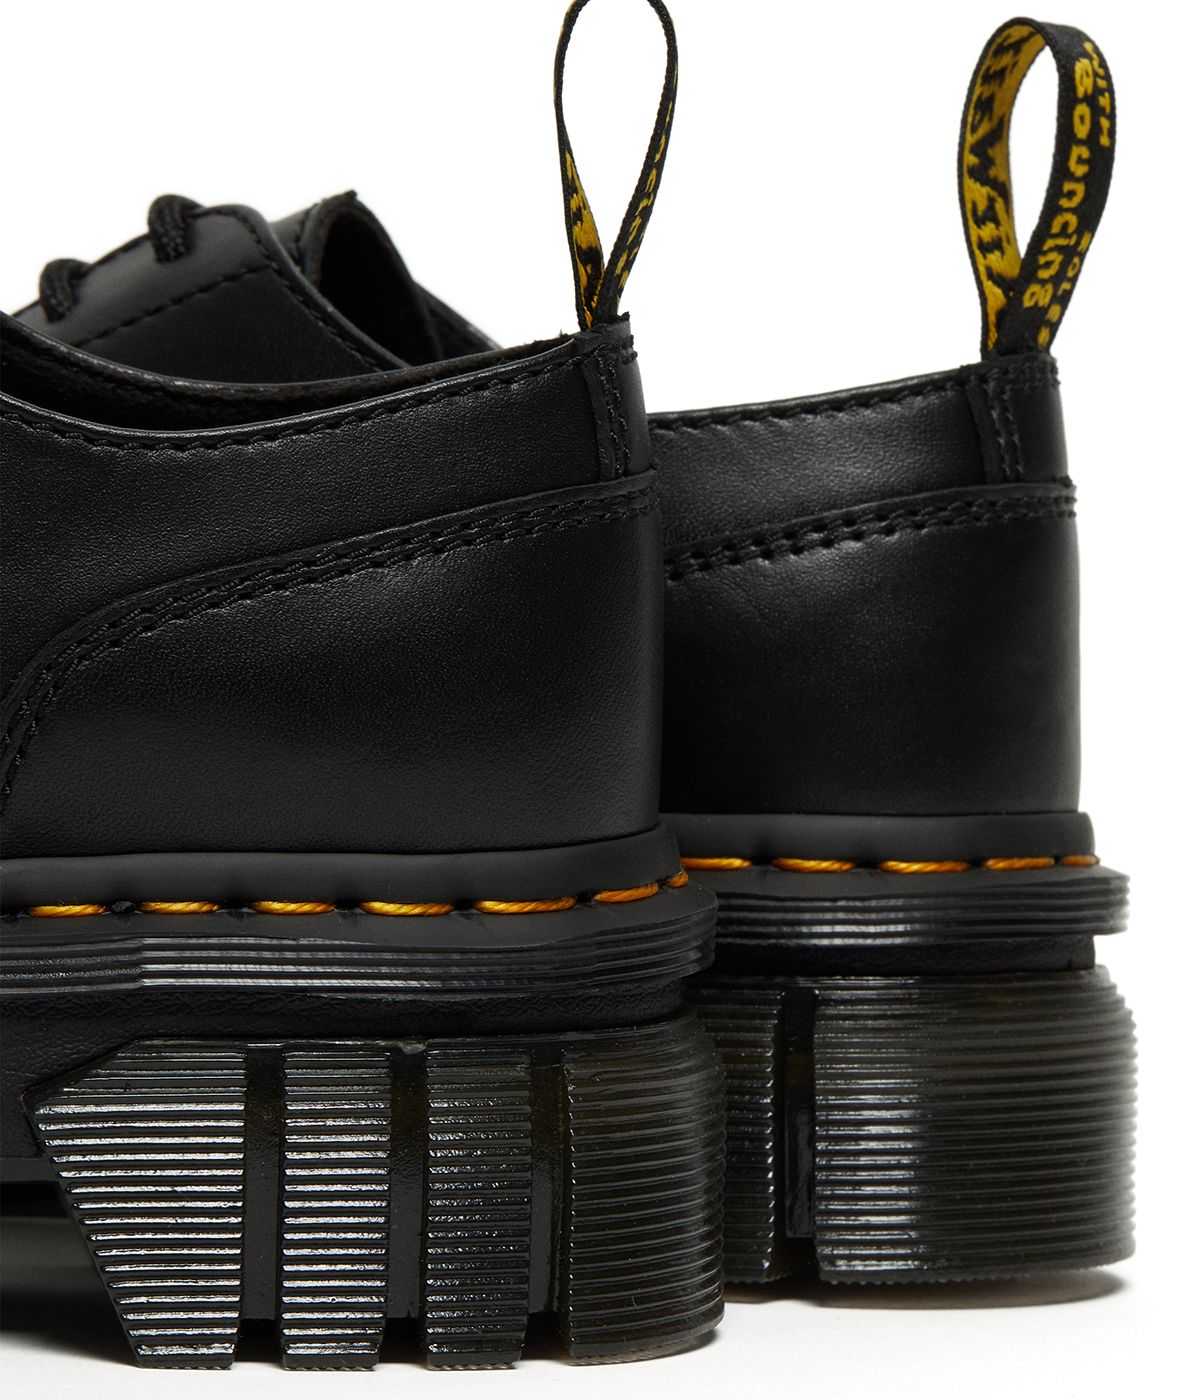 DR. MARTENS AUDRICK 3-EYE SHOE - Black Leather | Browns Shoes